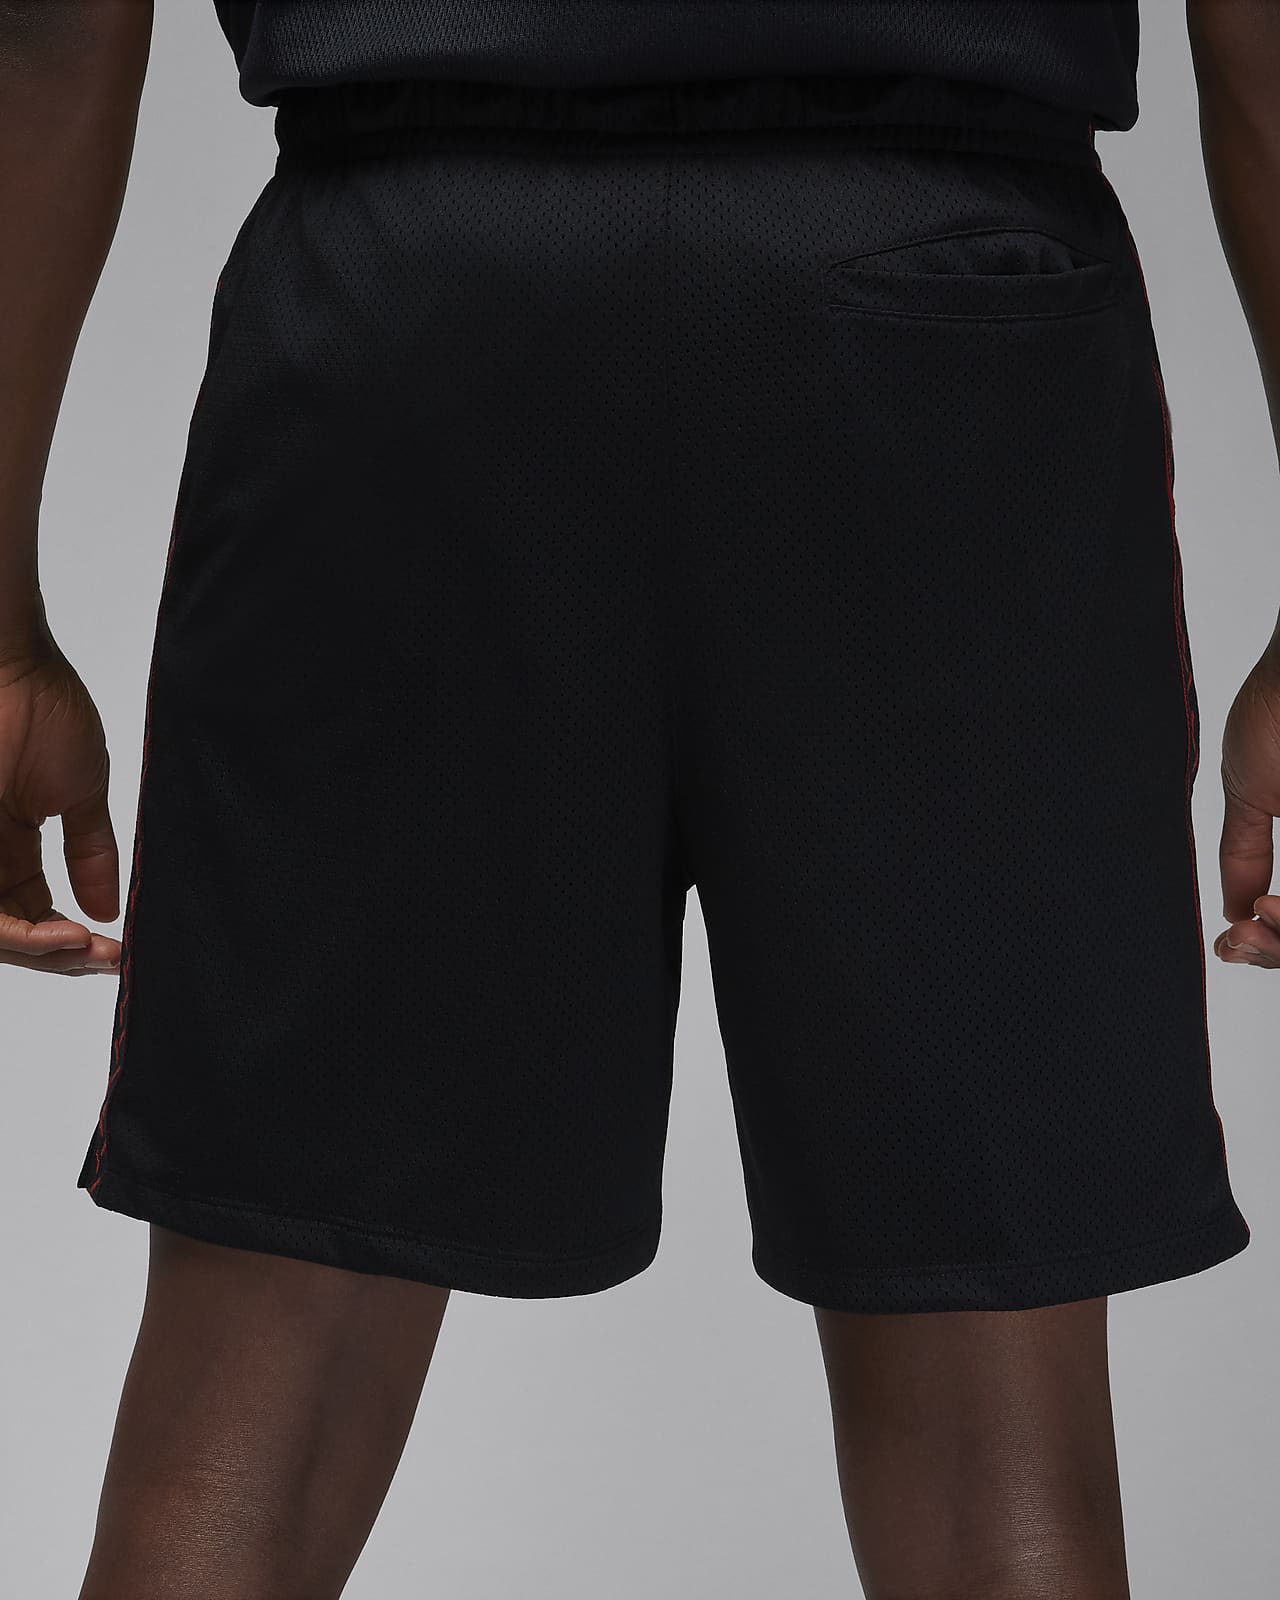 Nike Authentics Men's Mesh Shorts.